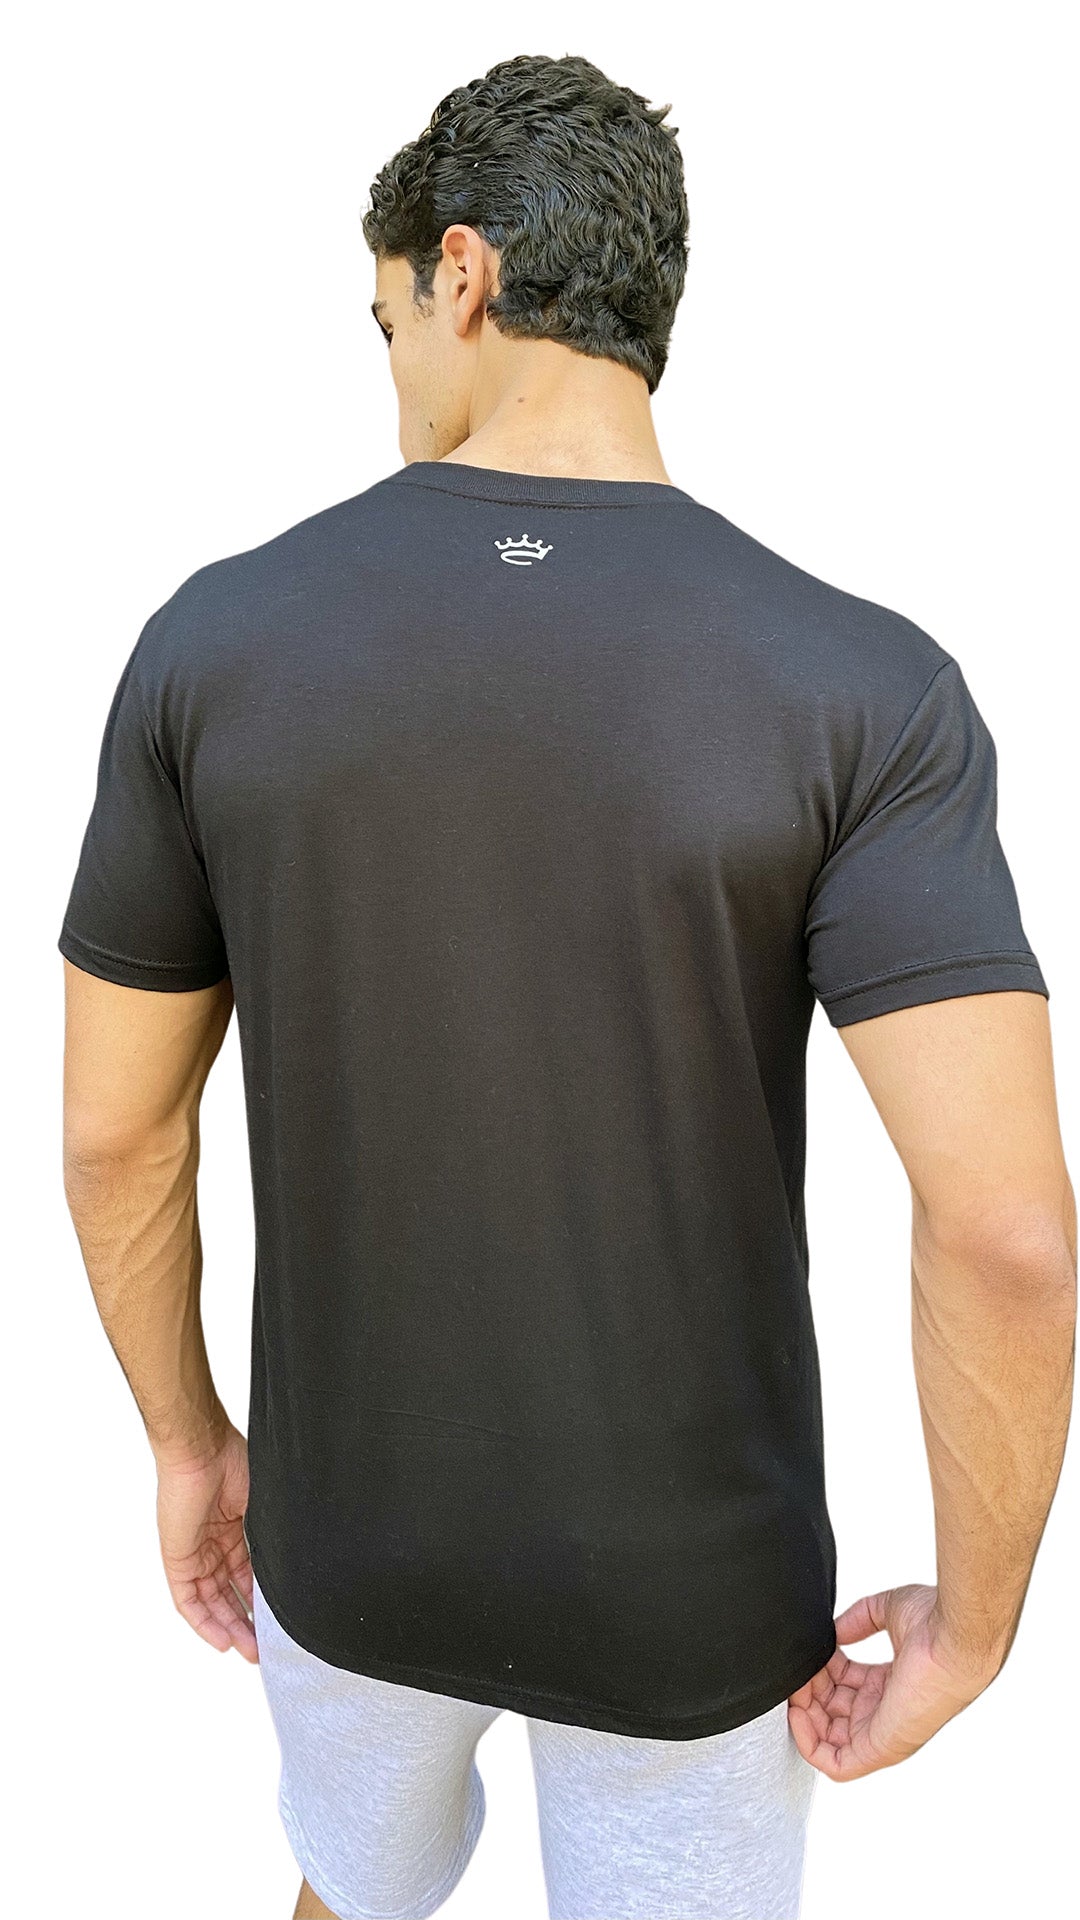 Men's Black / Grey - shirt - Crowned Brand ™